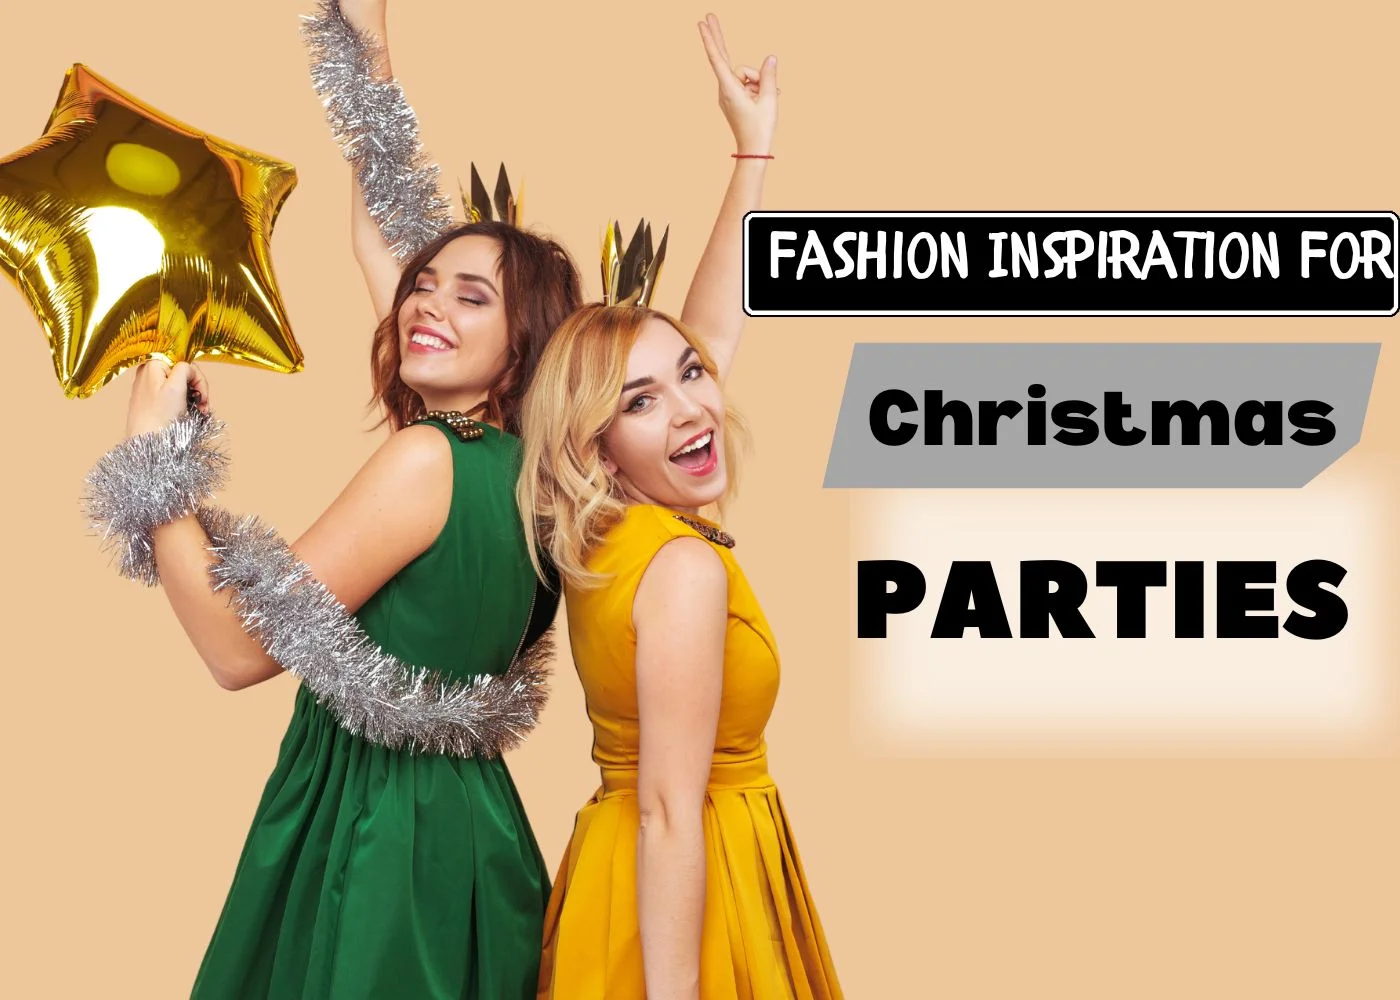 Winter Wonderland Gala: Fashion Inspiration for Christmas Parties